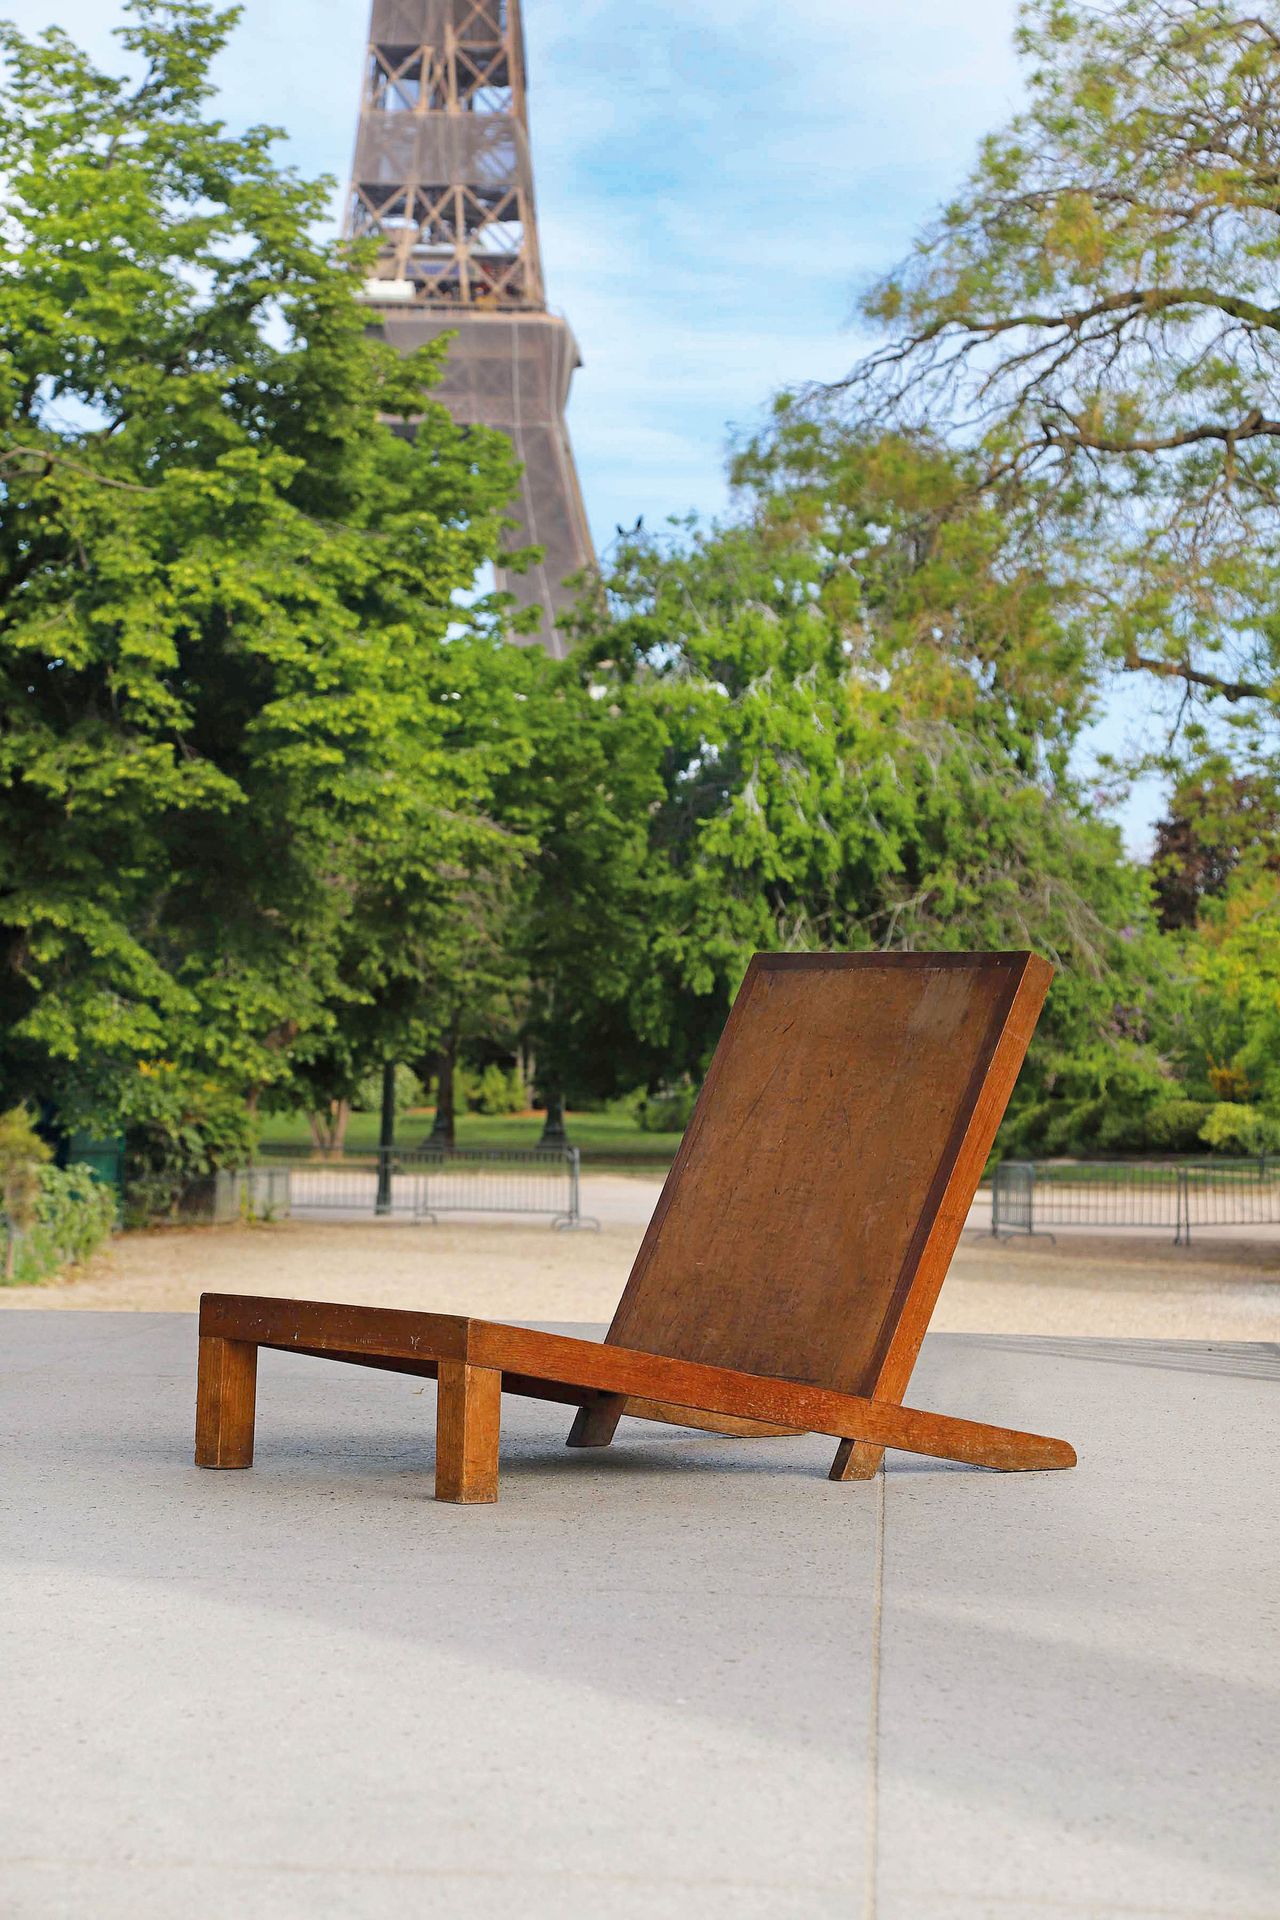 Null 法国的工作

长椅 木质 77 x 117 x 60 厘米。约1955年

休闲椅 木质 30.31 x 46.06 x 23.62 in.